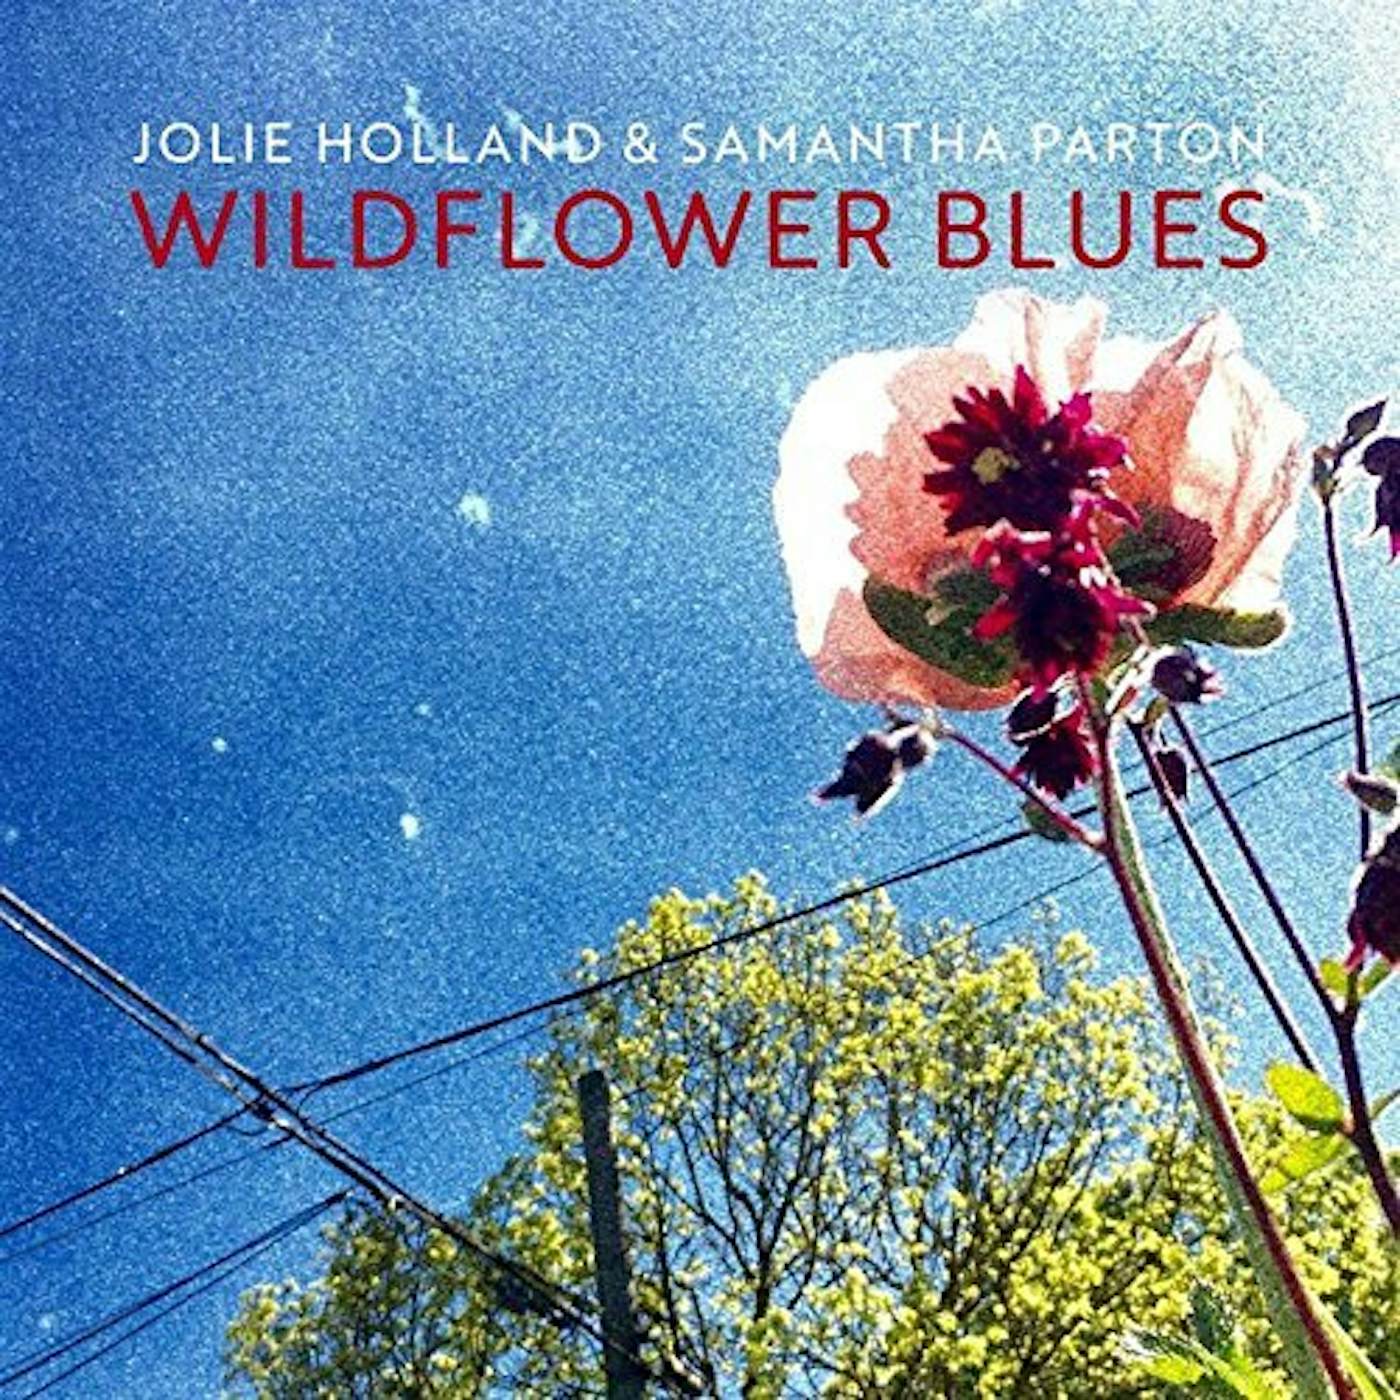 Jolie Holland & Samantha Parton WILDFLOWER BLUES CD